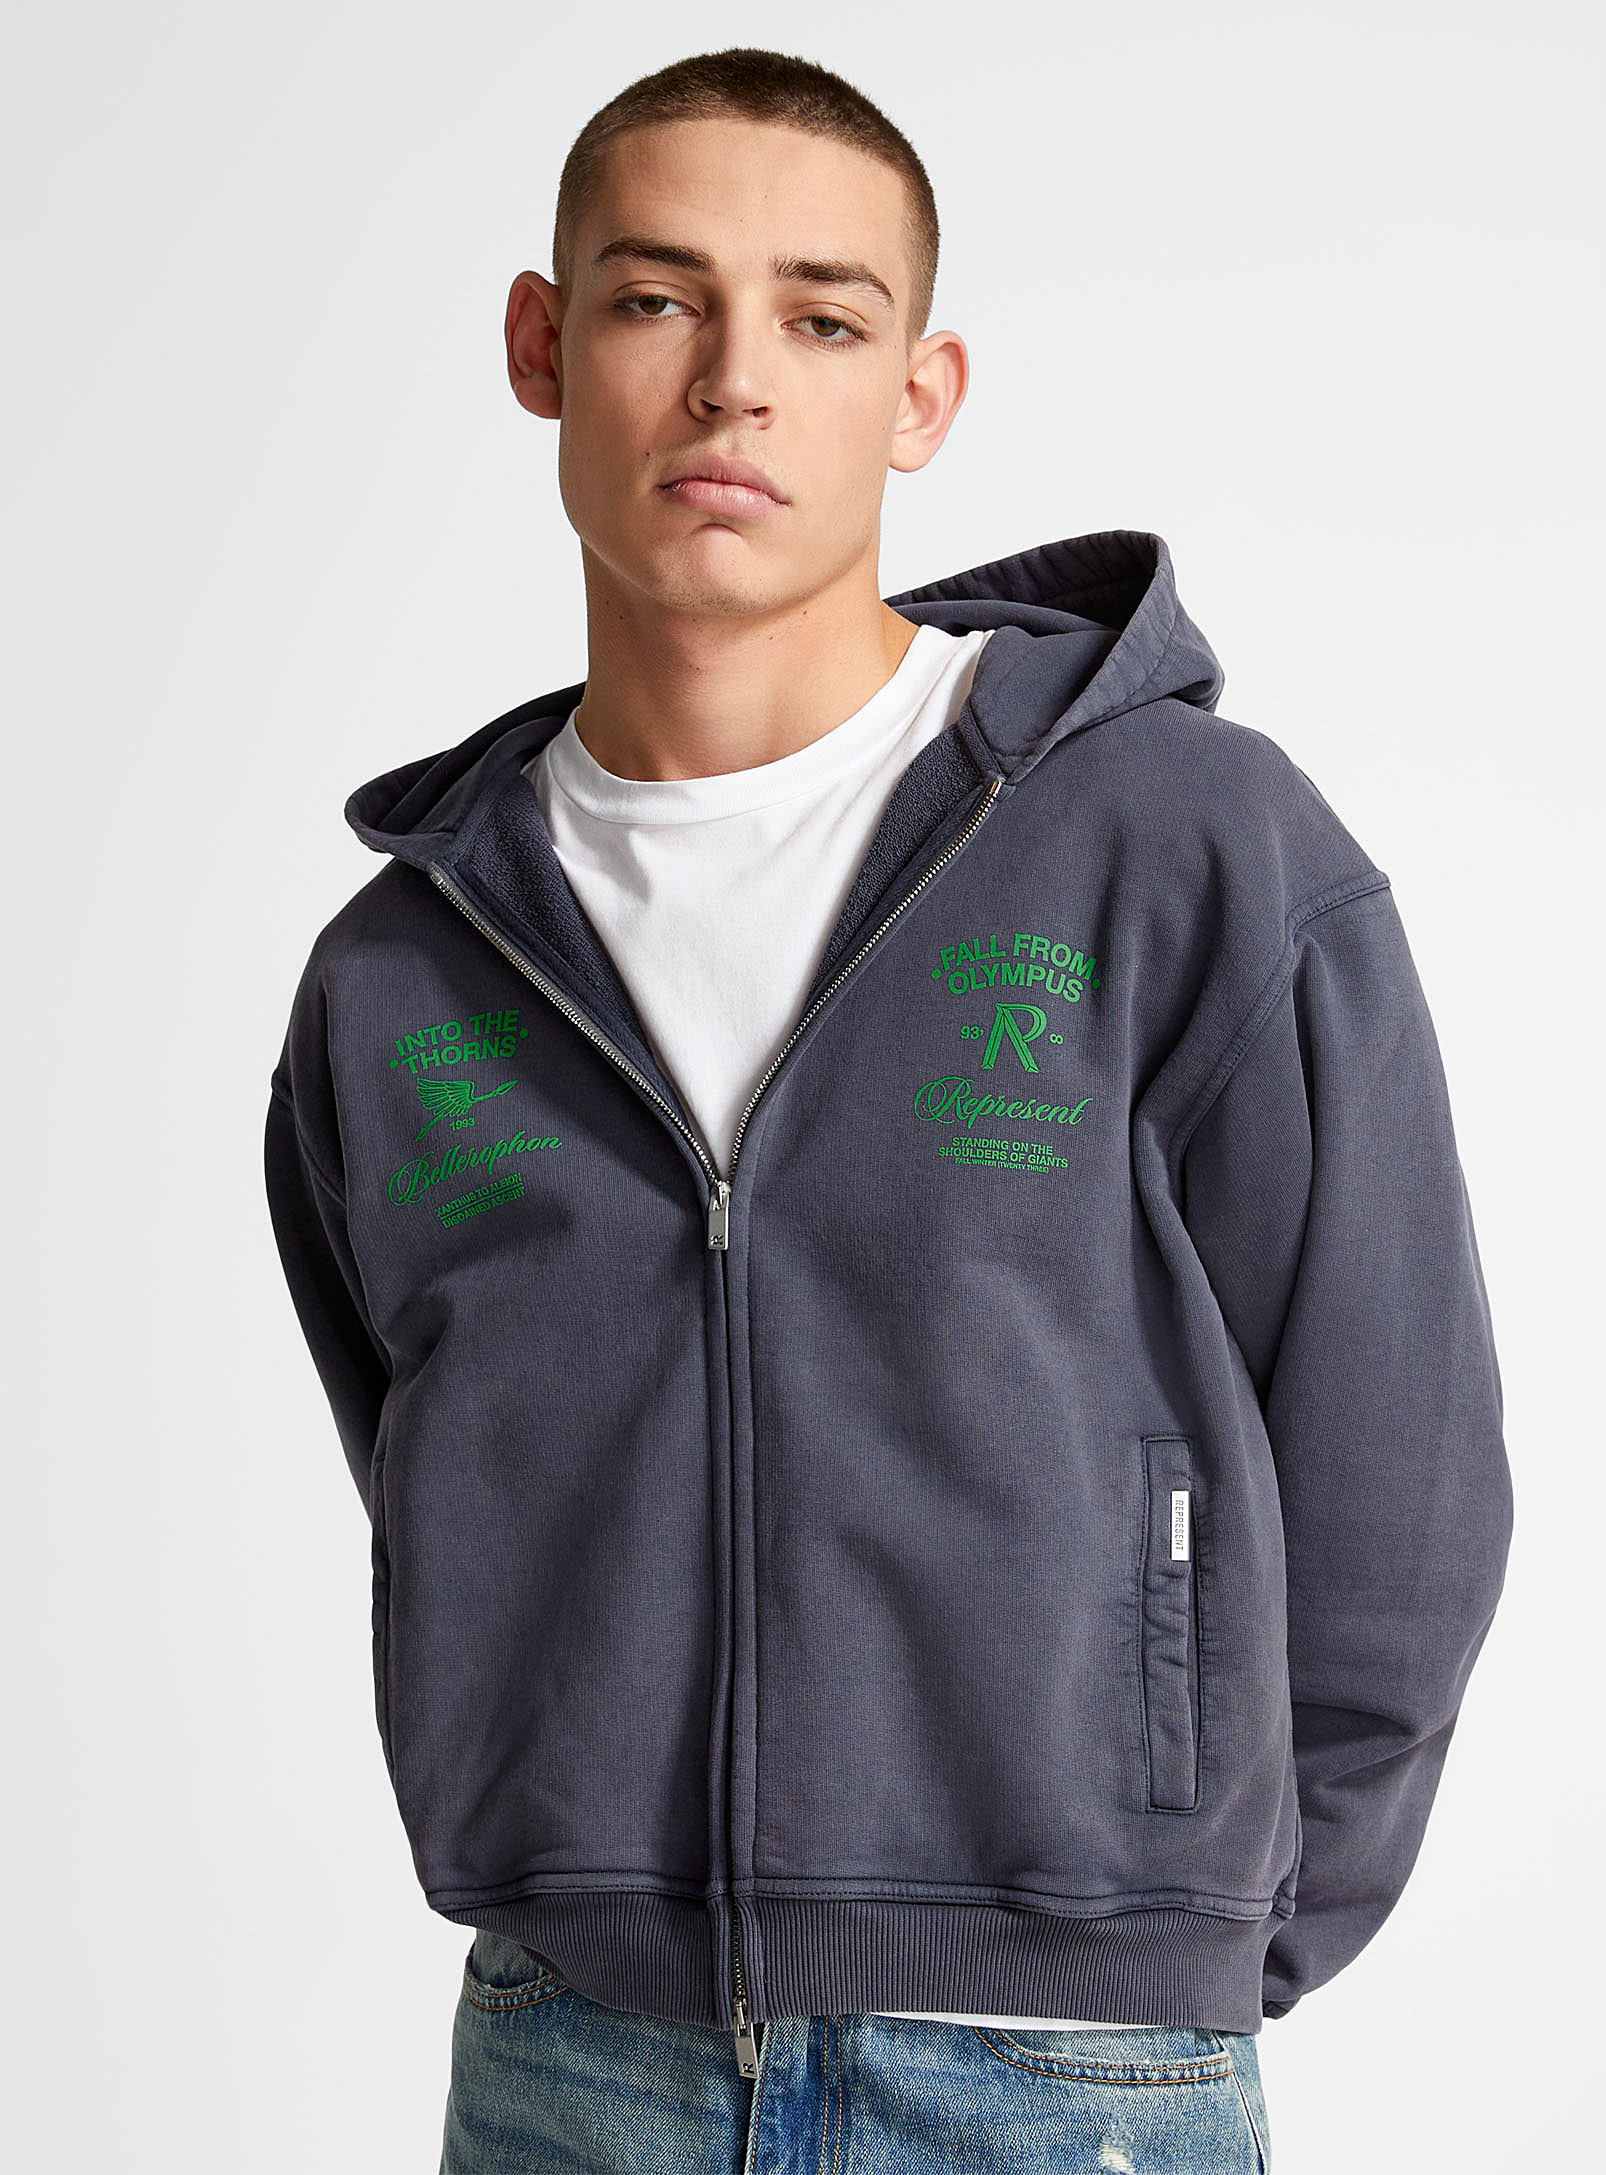 Represent - Men's Fall From Olympus zip-up hoodie